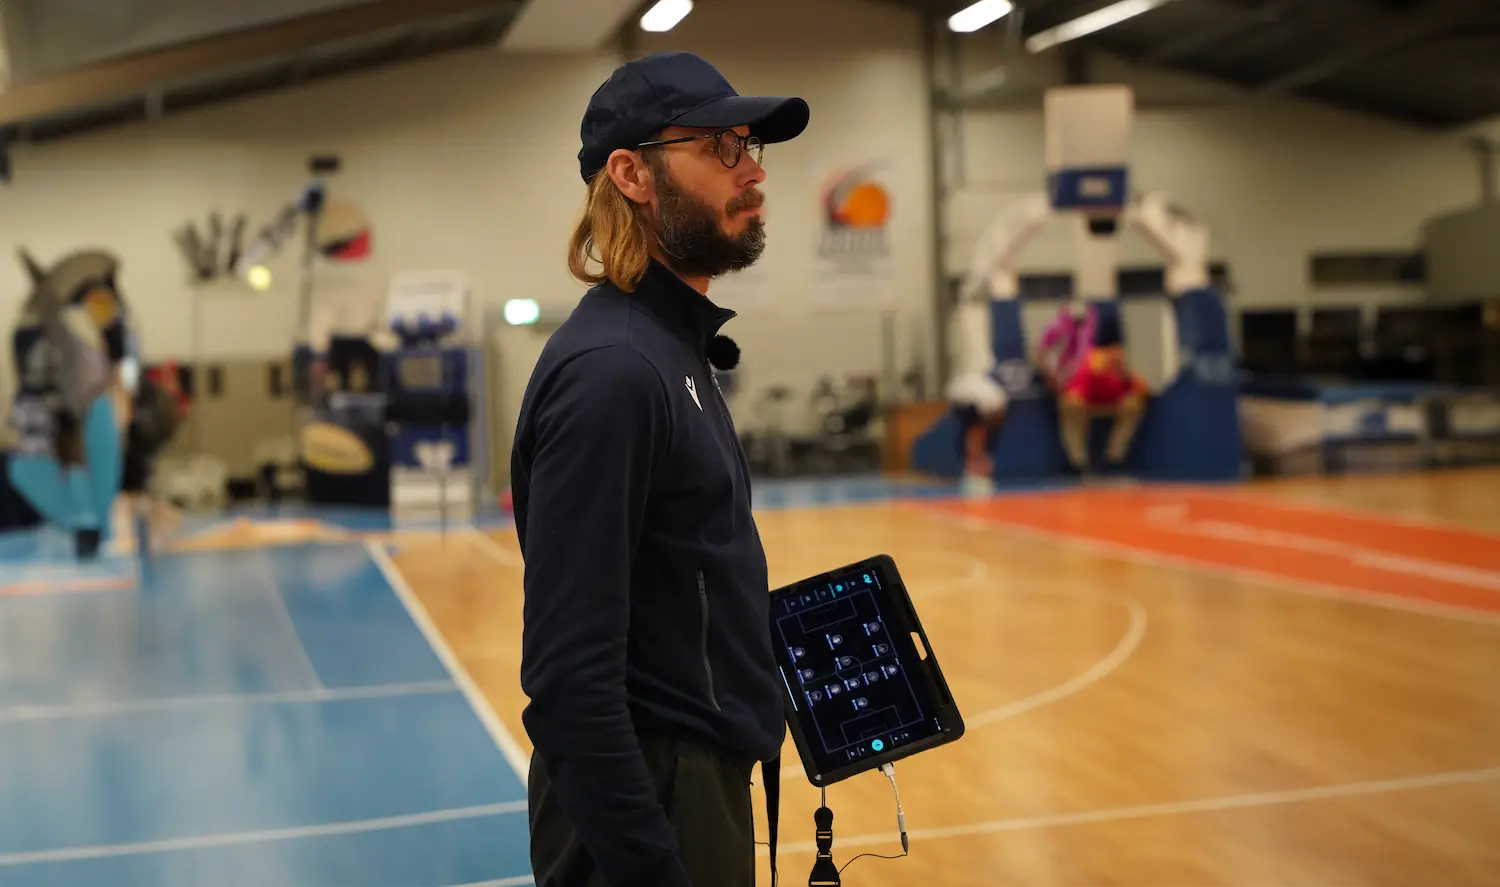 Coach Björn using the Coachwhisperer system while training